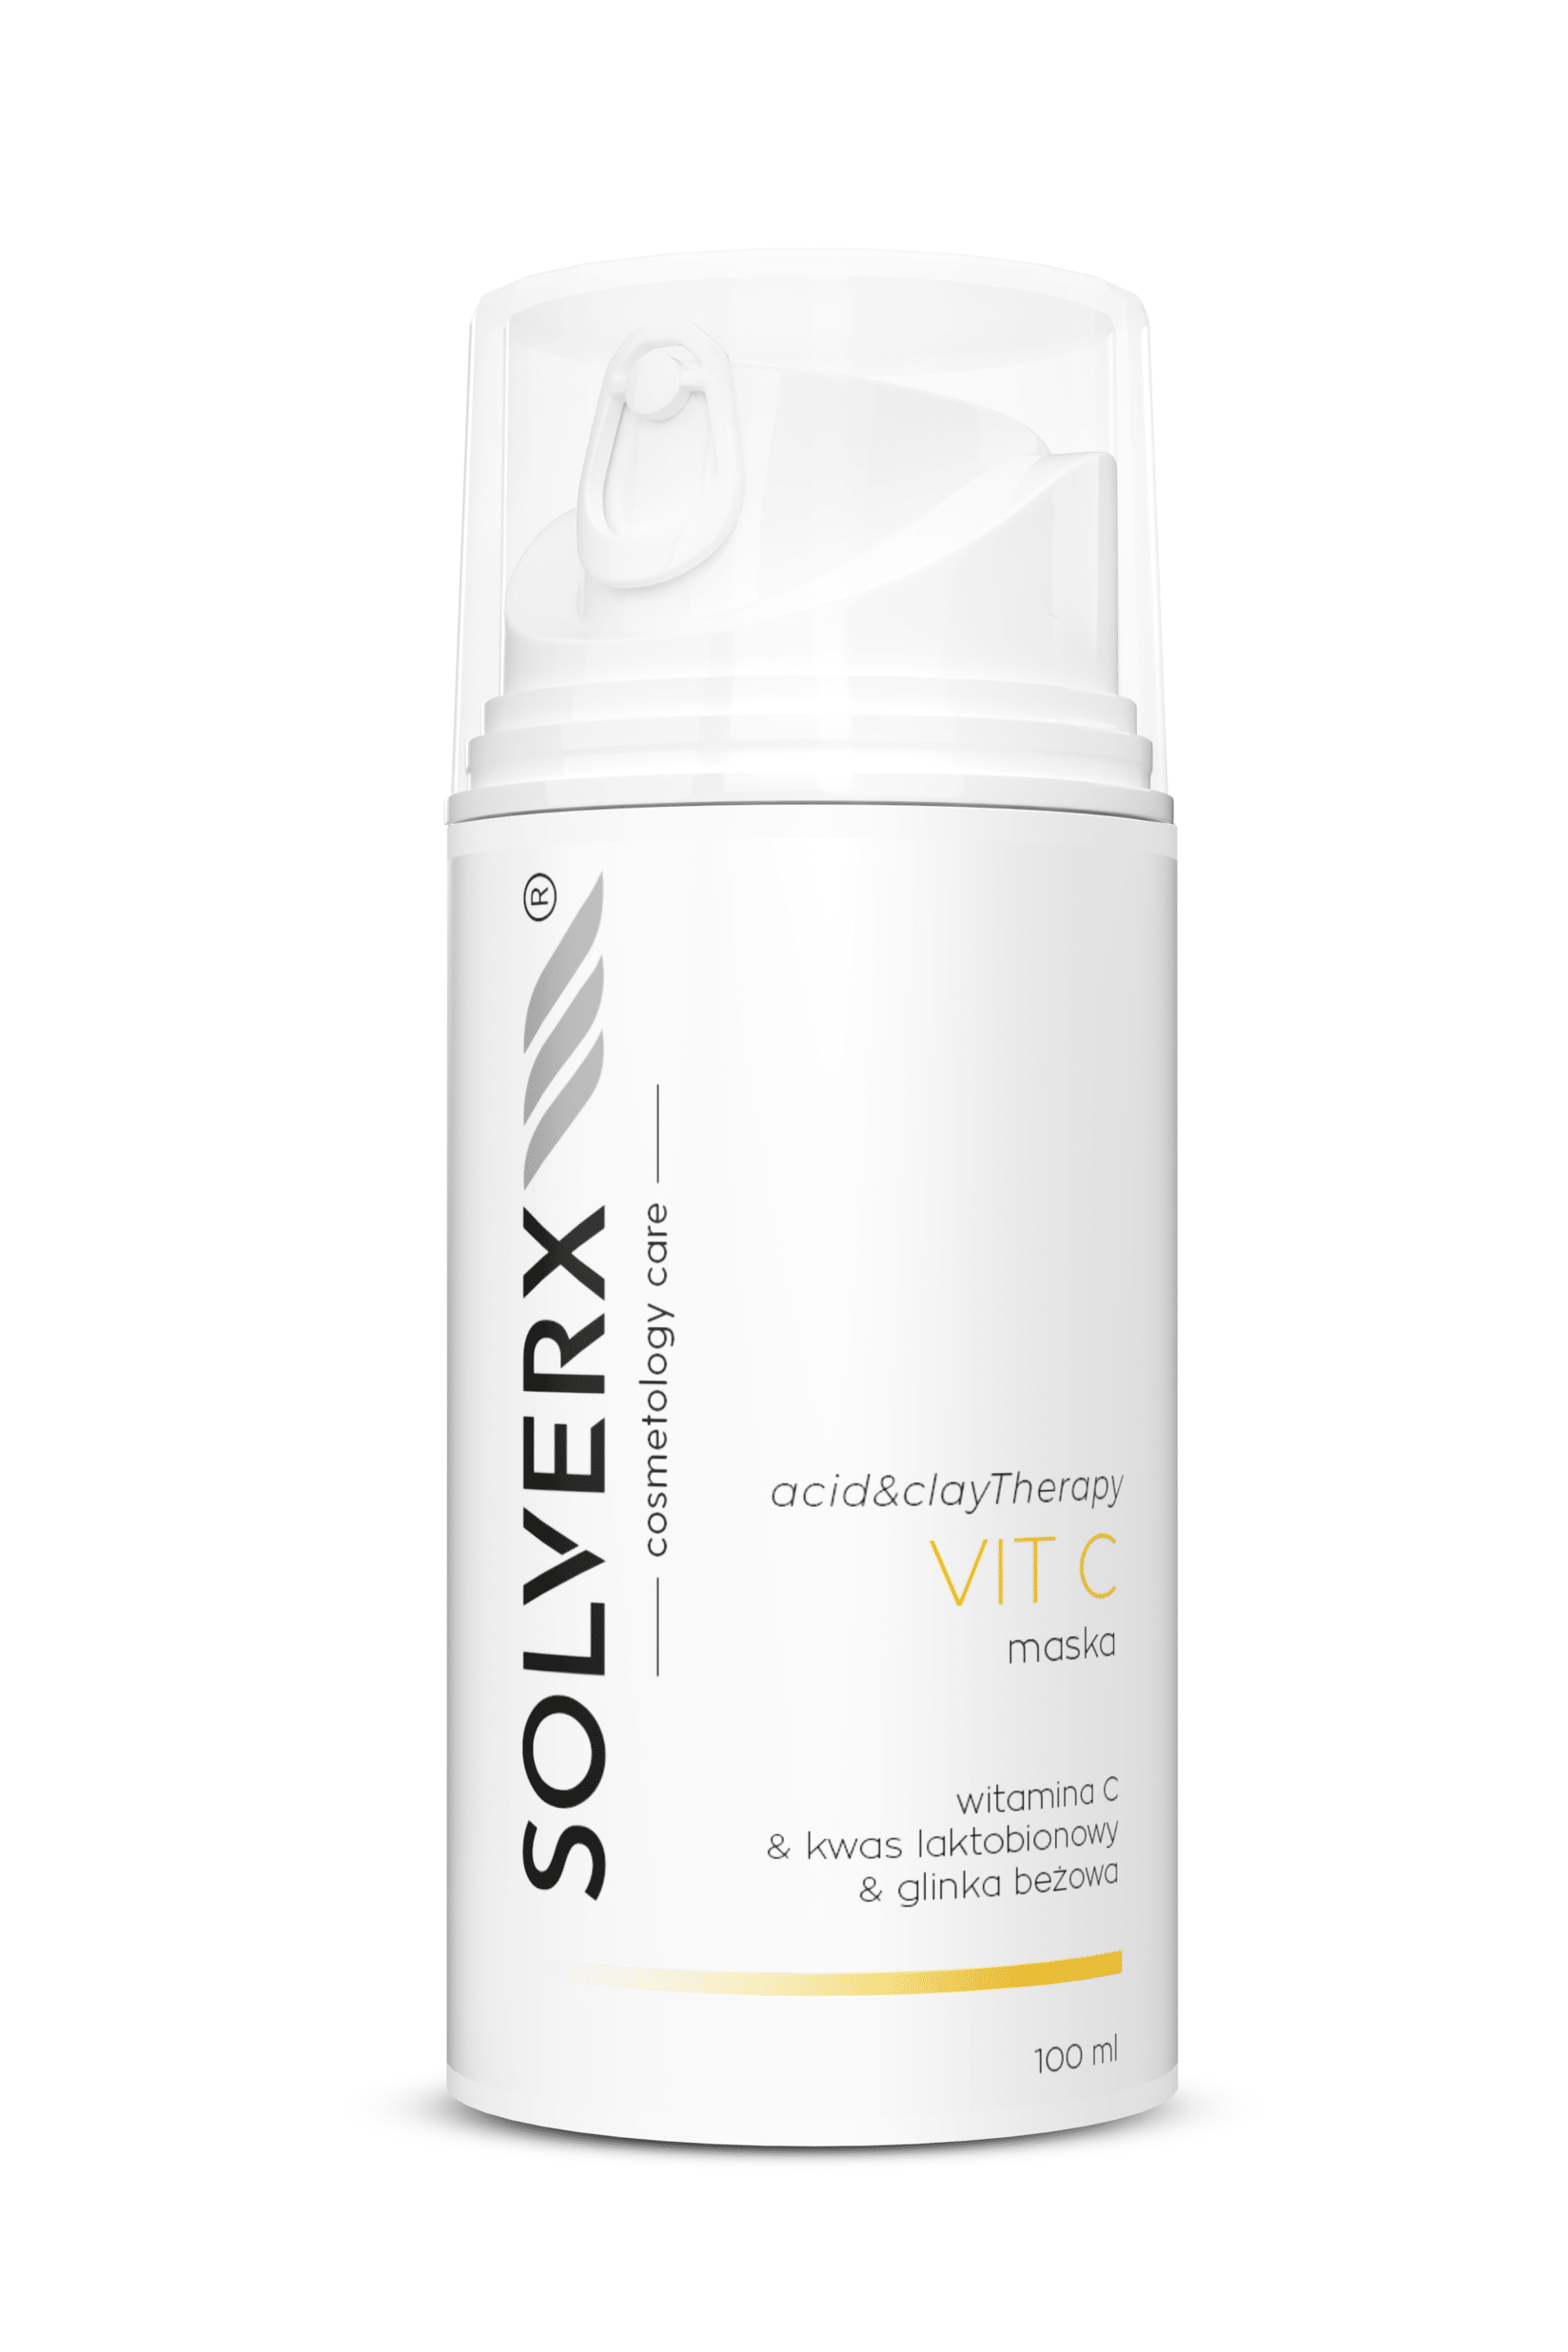 Solverx Acid & Clay Therapy maska VIT C